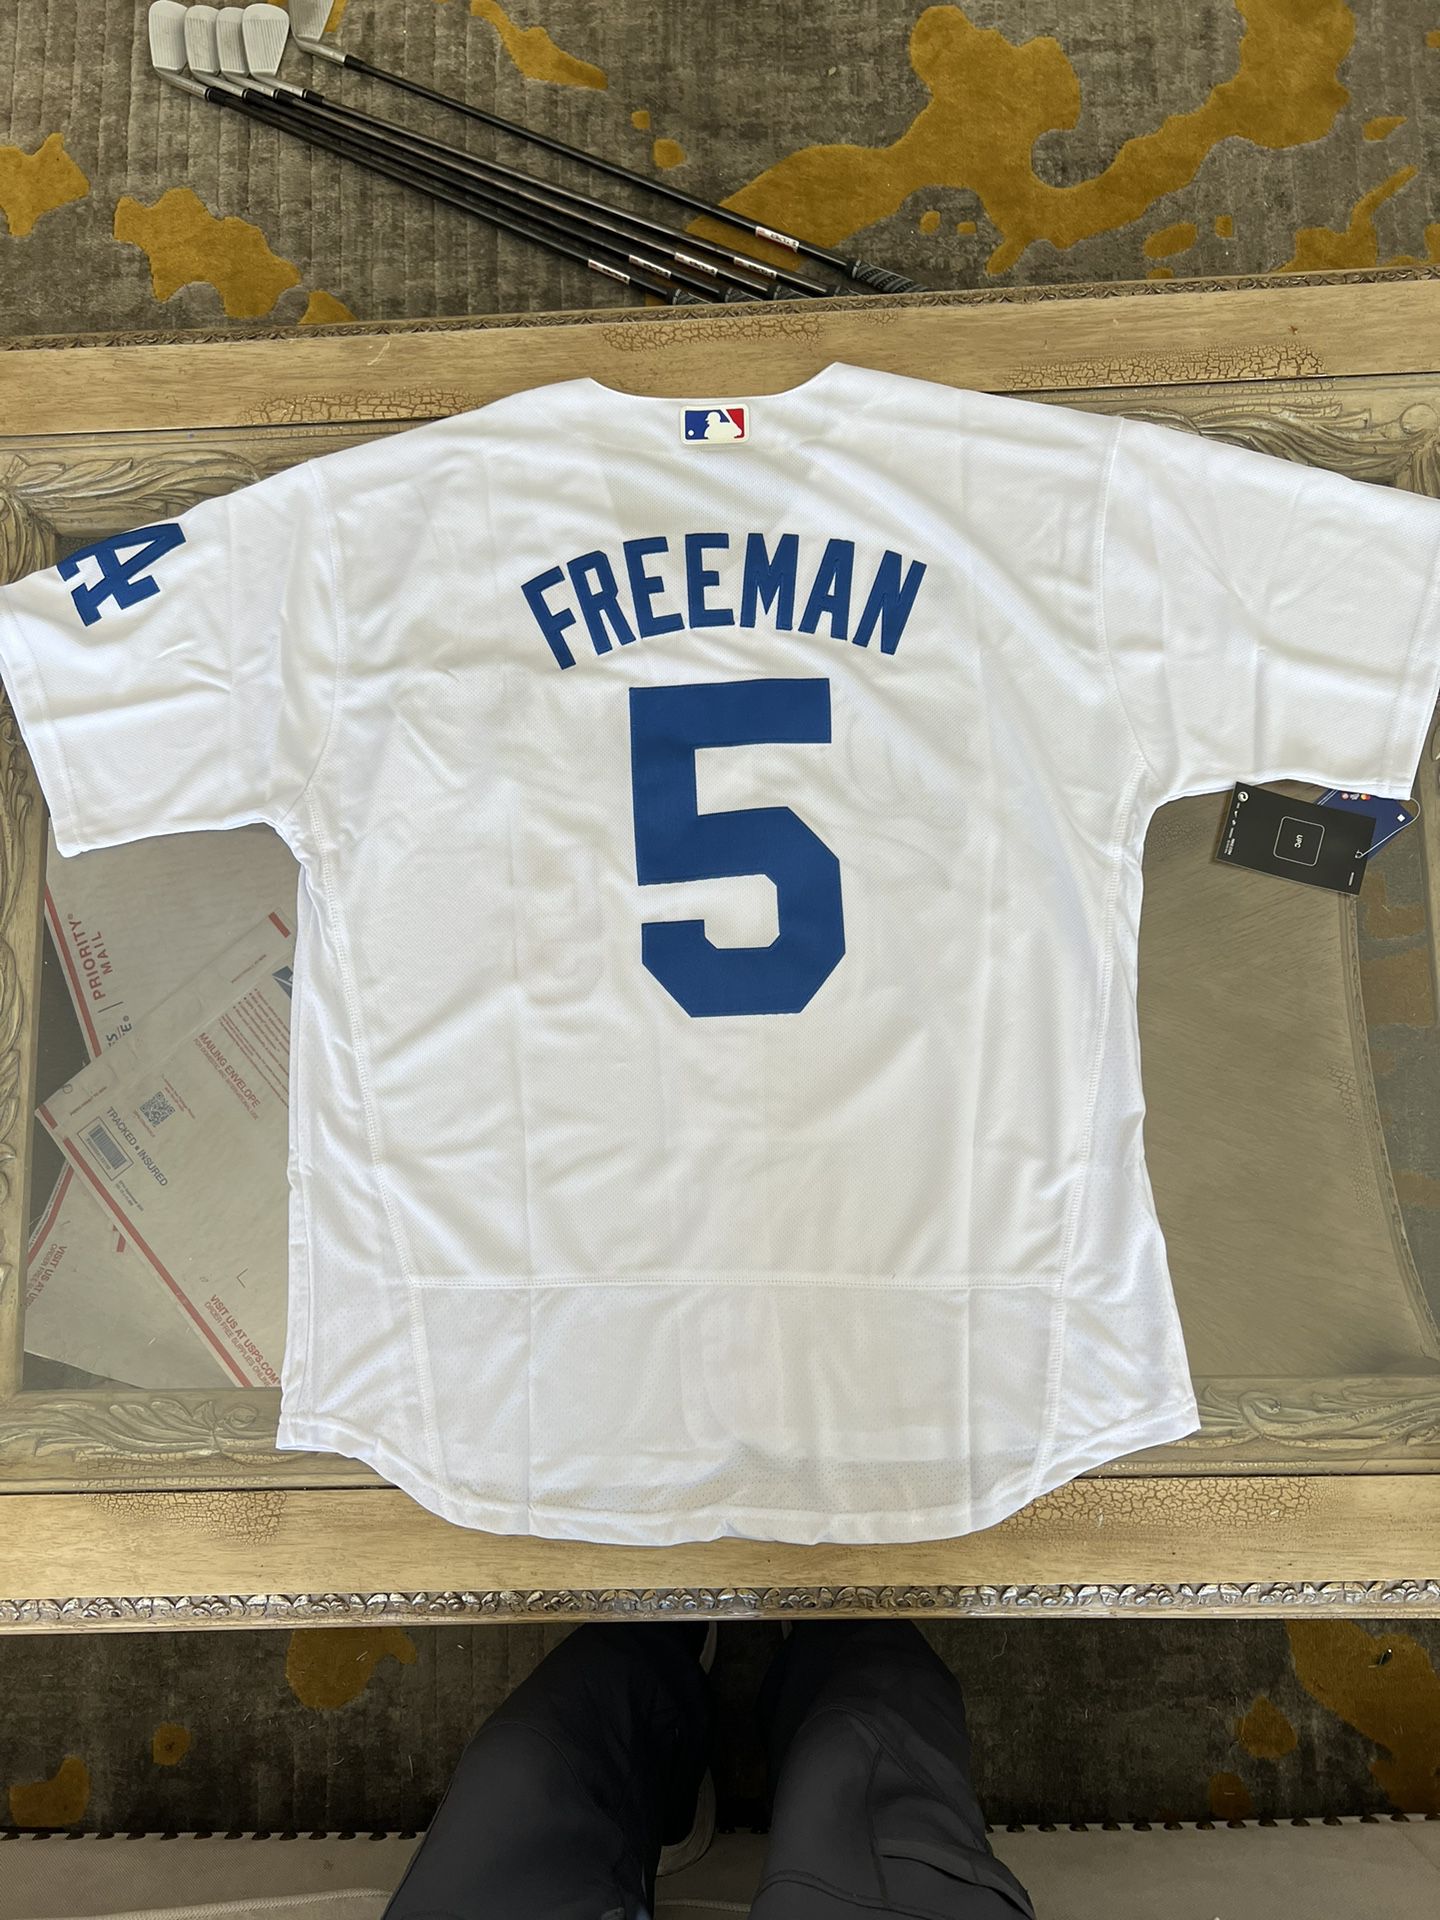 Dodger Authentic Jersey Size 48 Freddie Freeman for Sale in Claremont, CA -  OfferUp